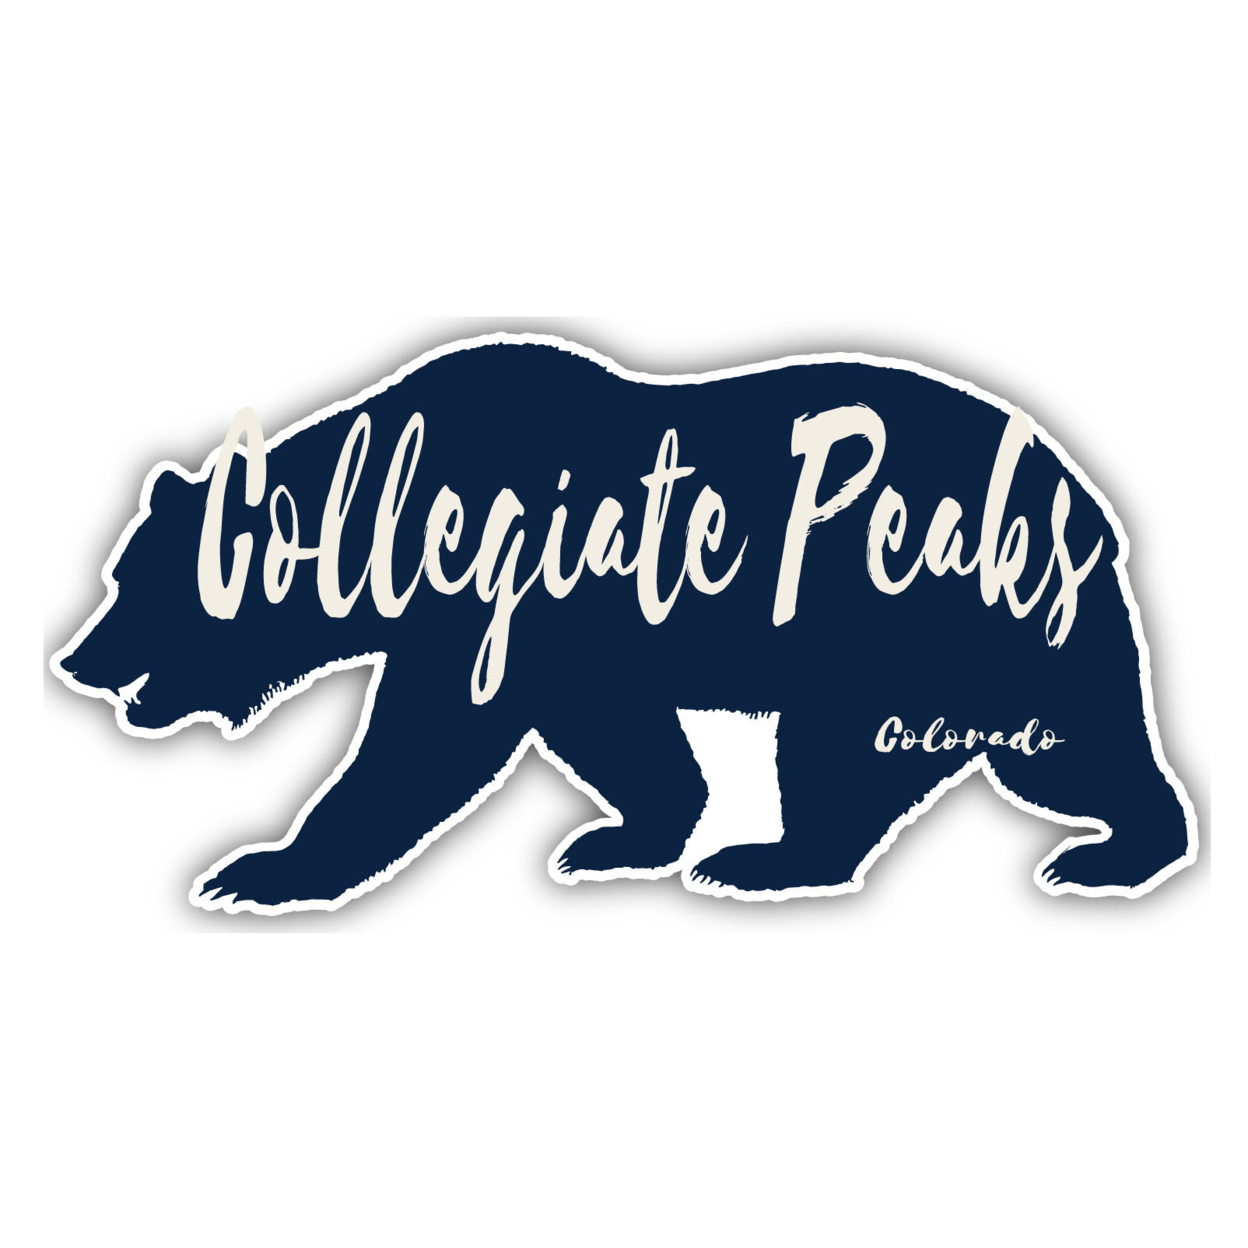 Collegiate Peaks Colorado Souvenir Decorative Stickers (Choose Theme And Size) - Single Unit, 4-Inch, Bear